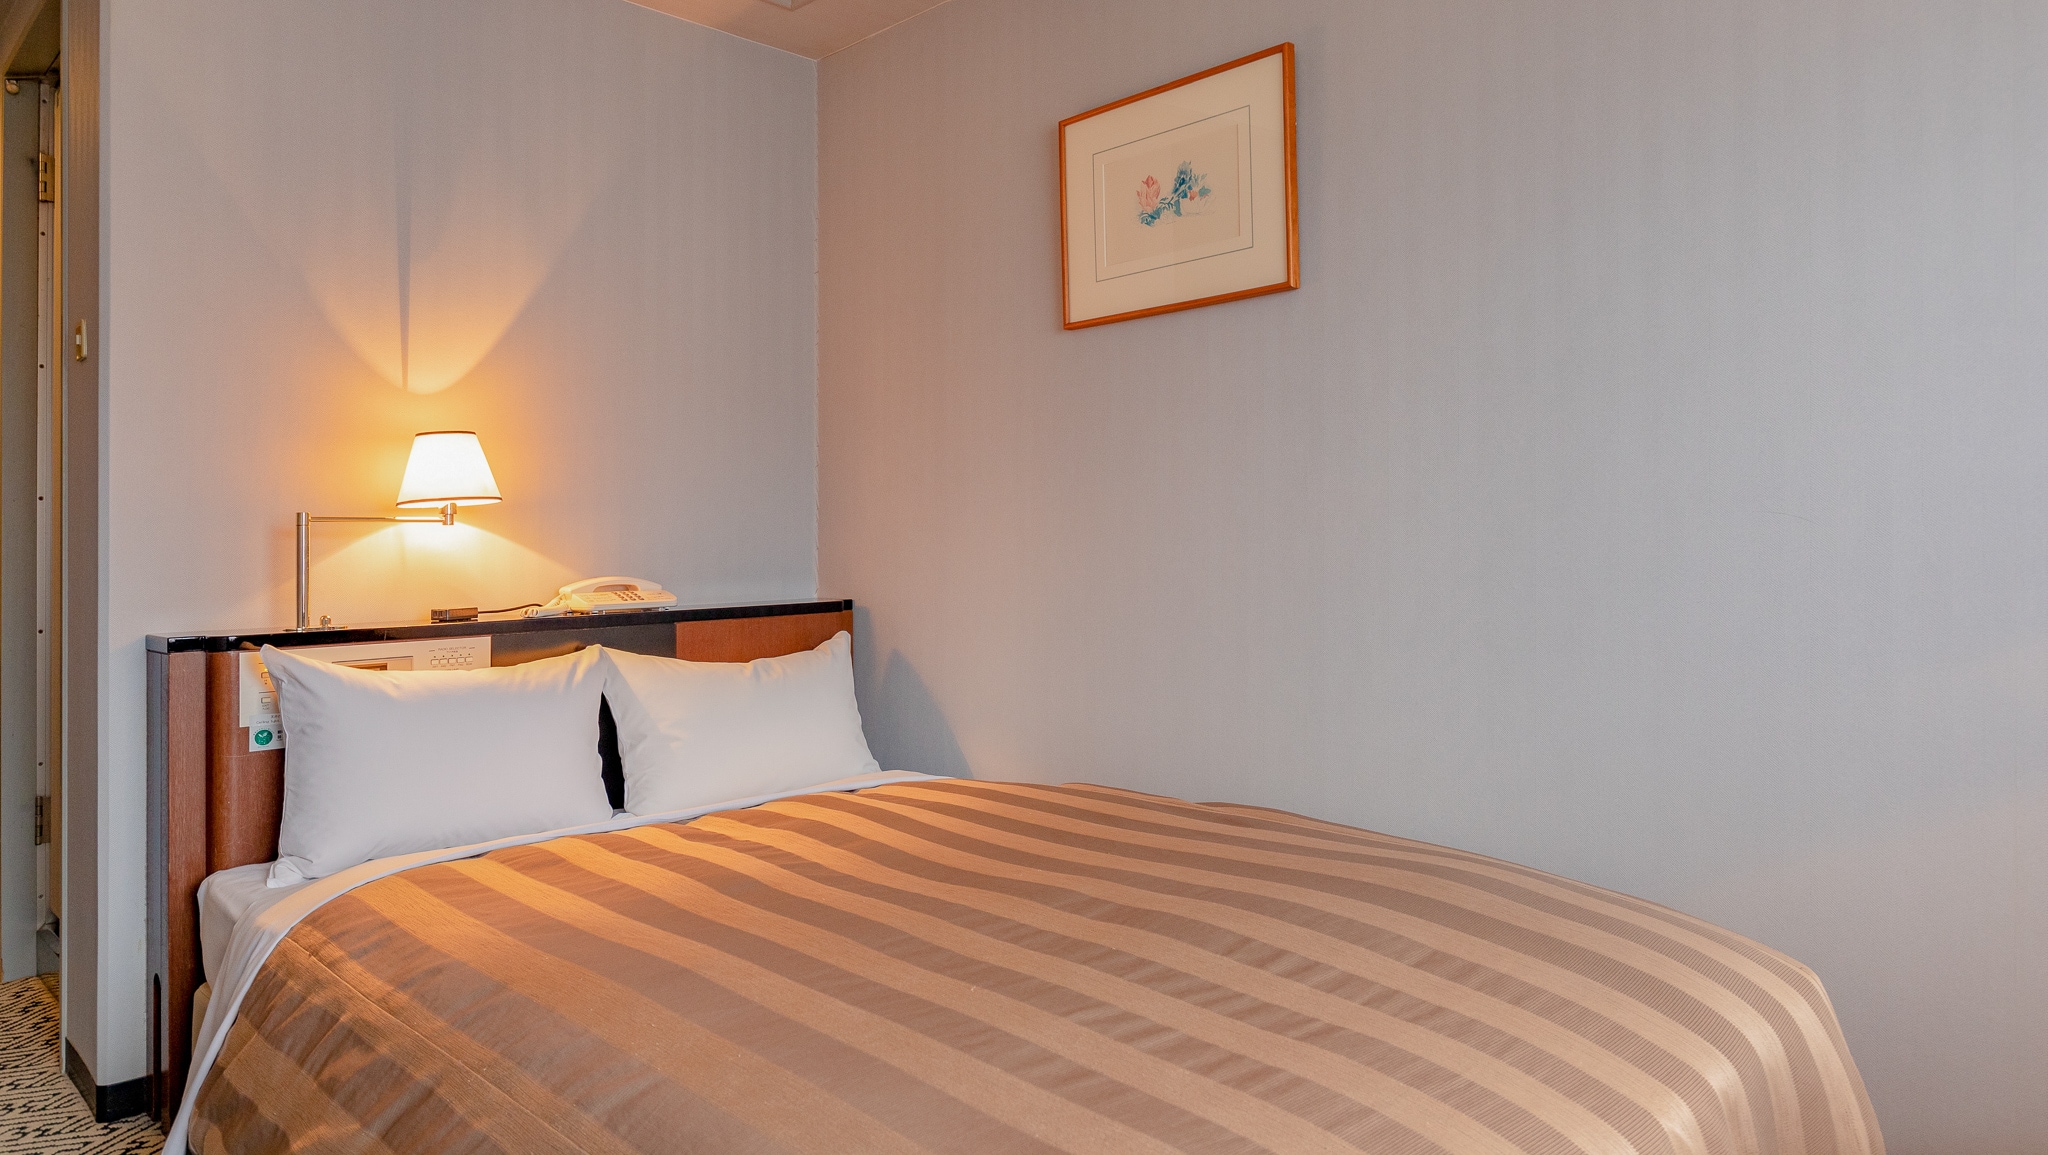 <Semi-double room> 16㎡ / Bed width 120cm